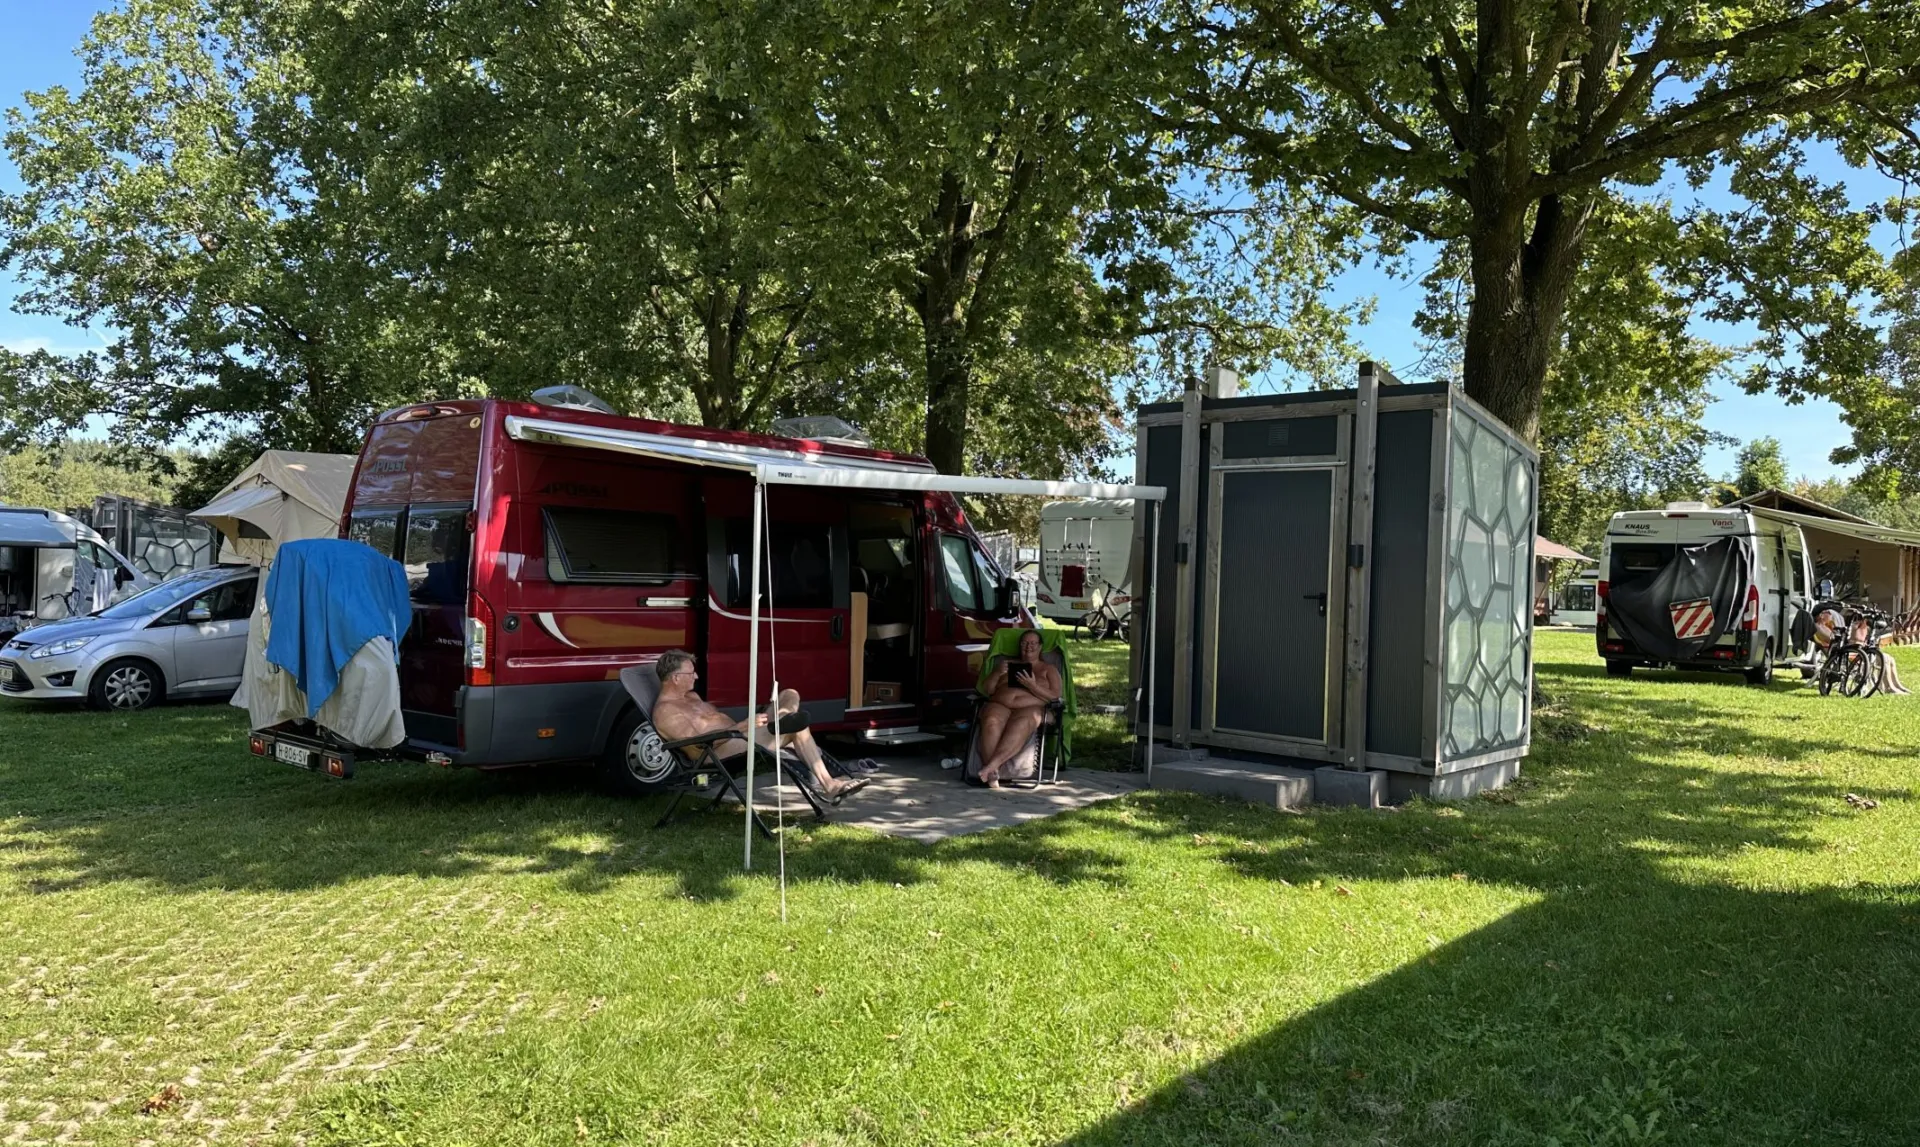 Naturistencamping Nederland camperplaats met prive sanitair 3